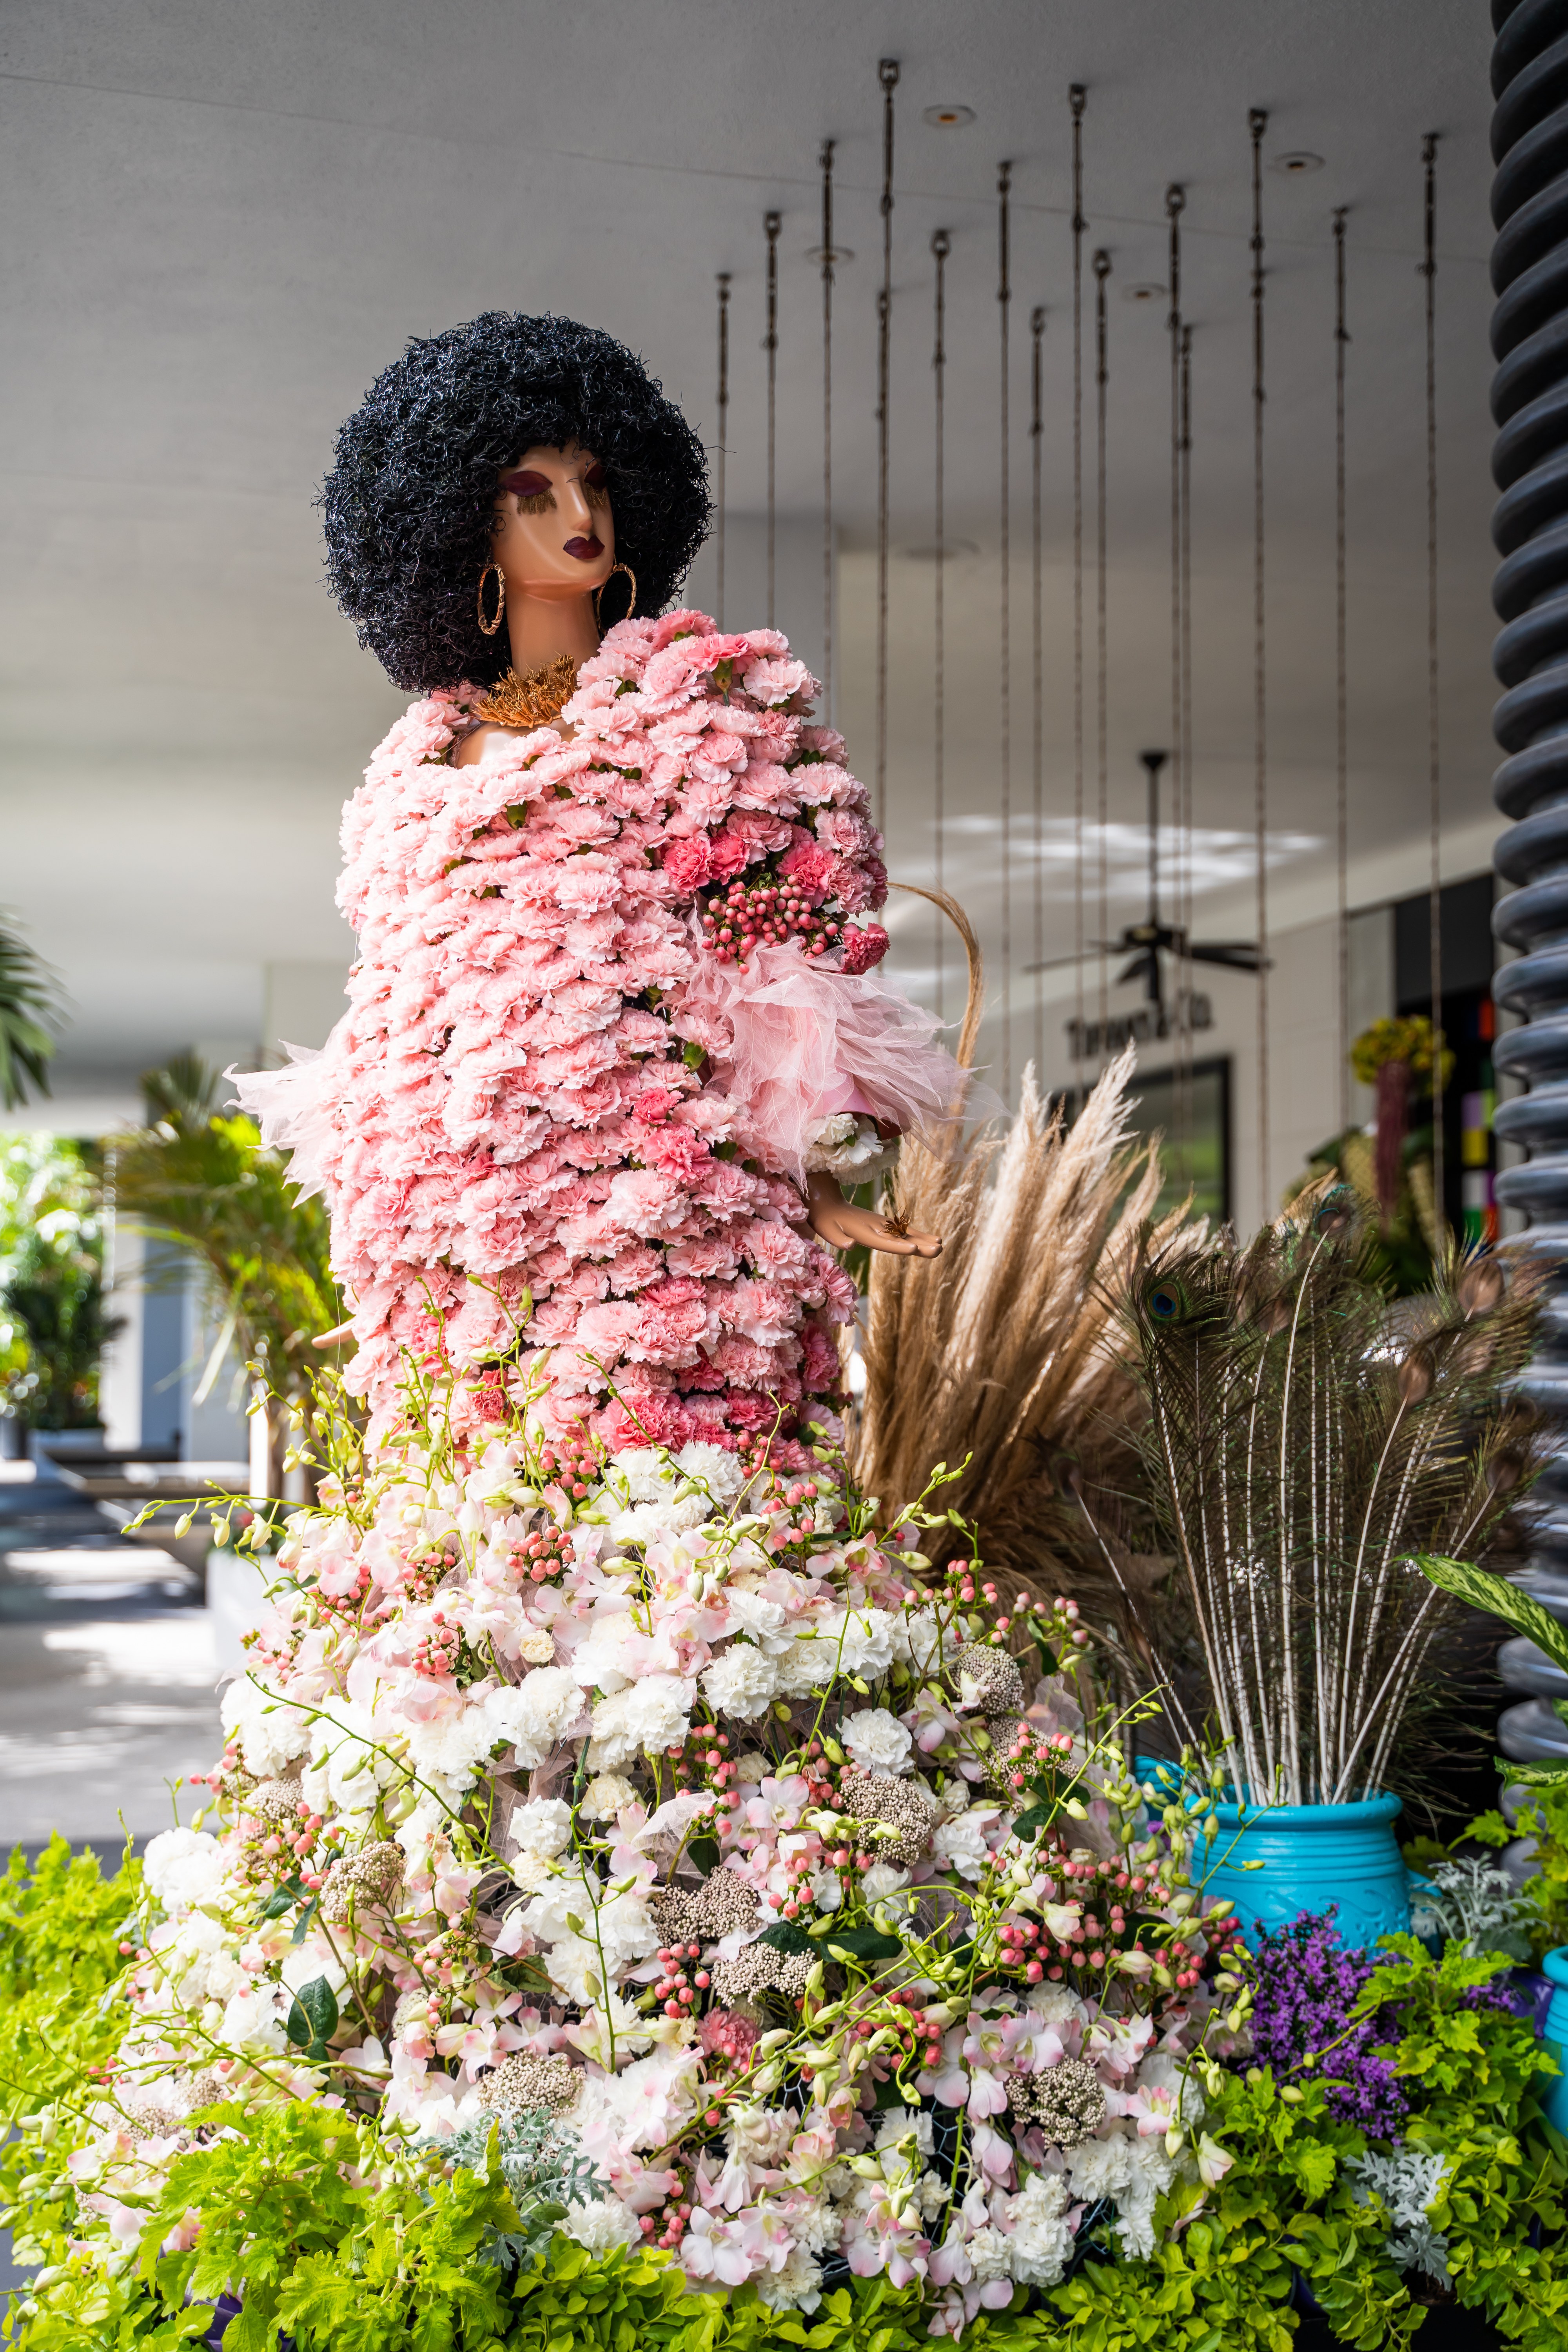 Floral mannequin inspired by Celia Cruz